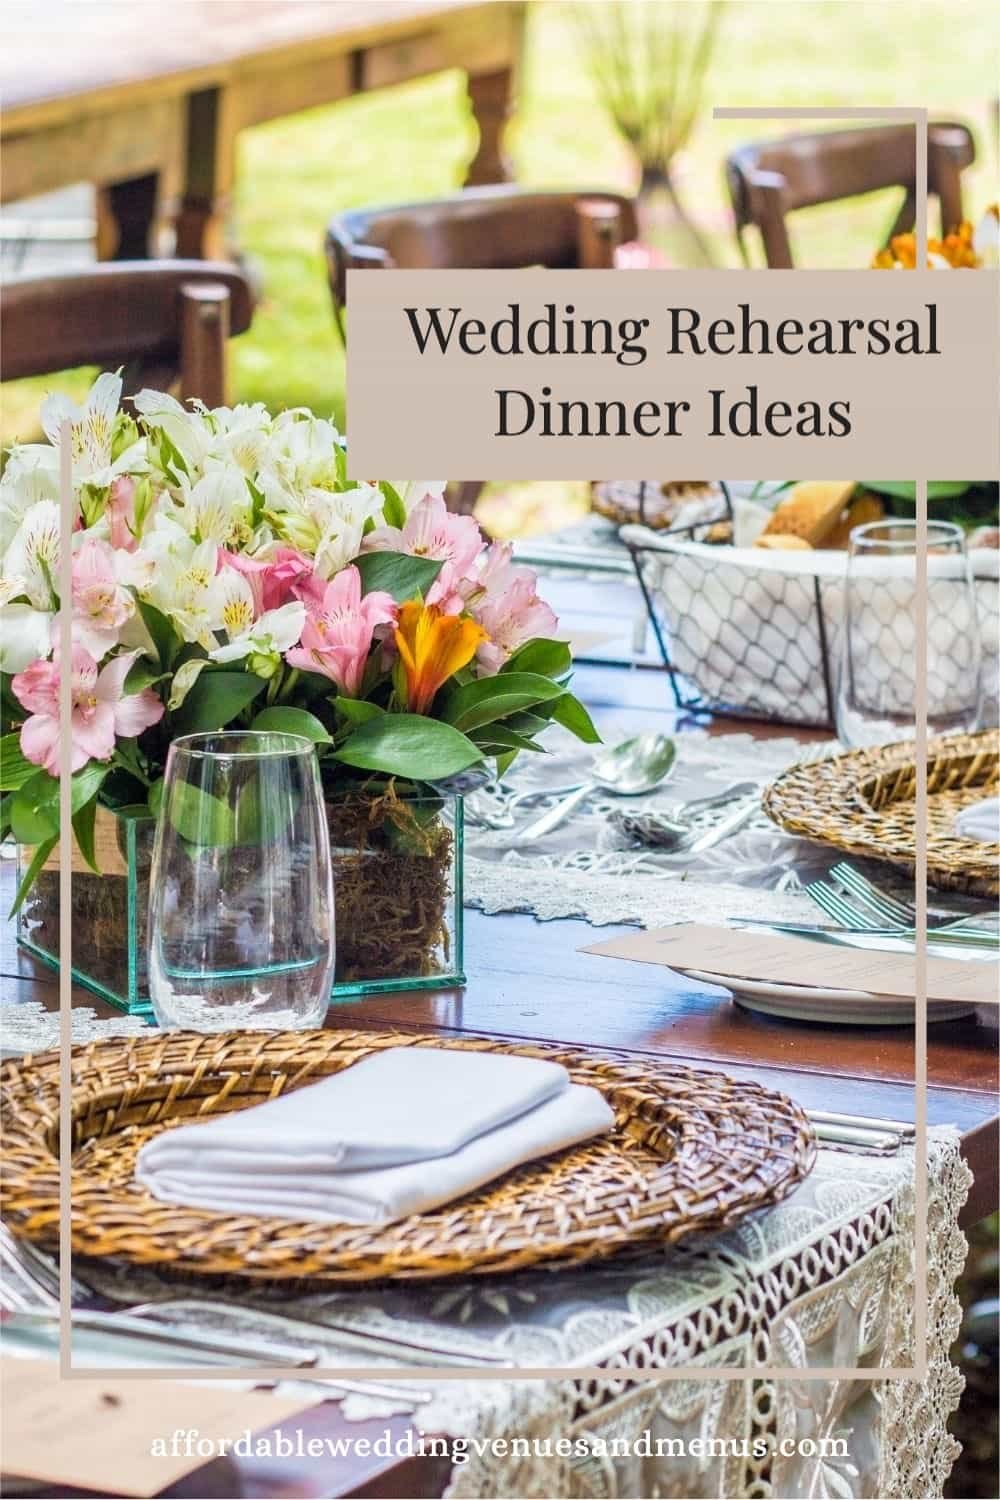 Wedding Rehearsal Dinner Ideas, Timeline, and Etiquette